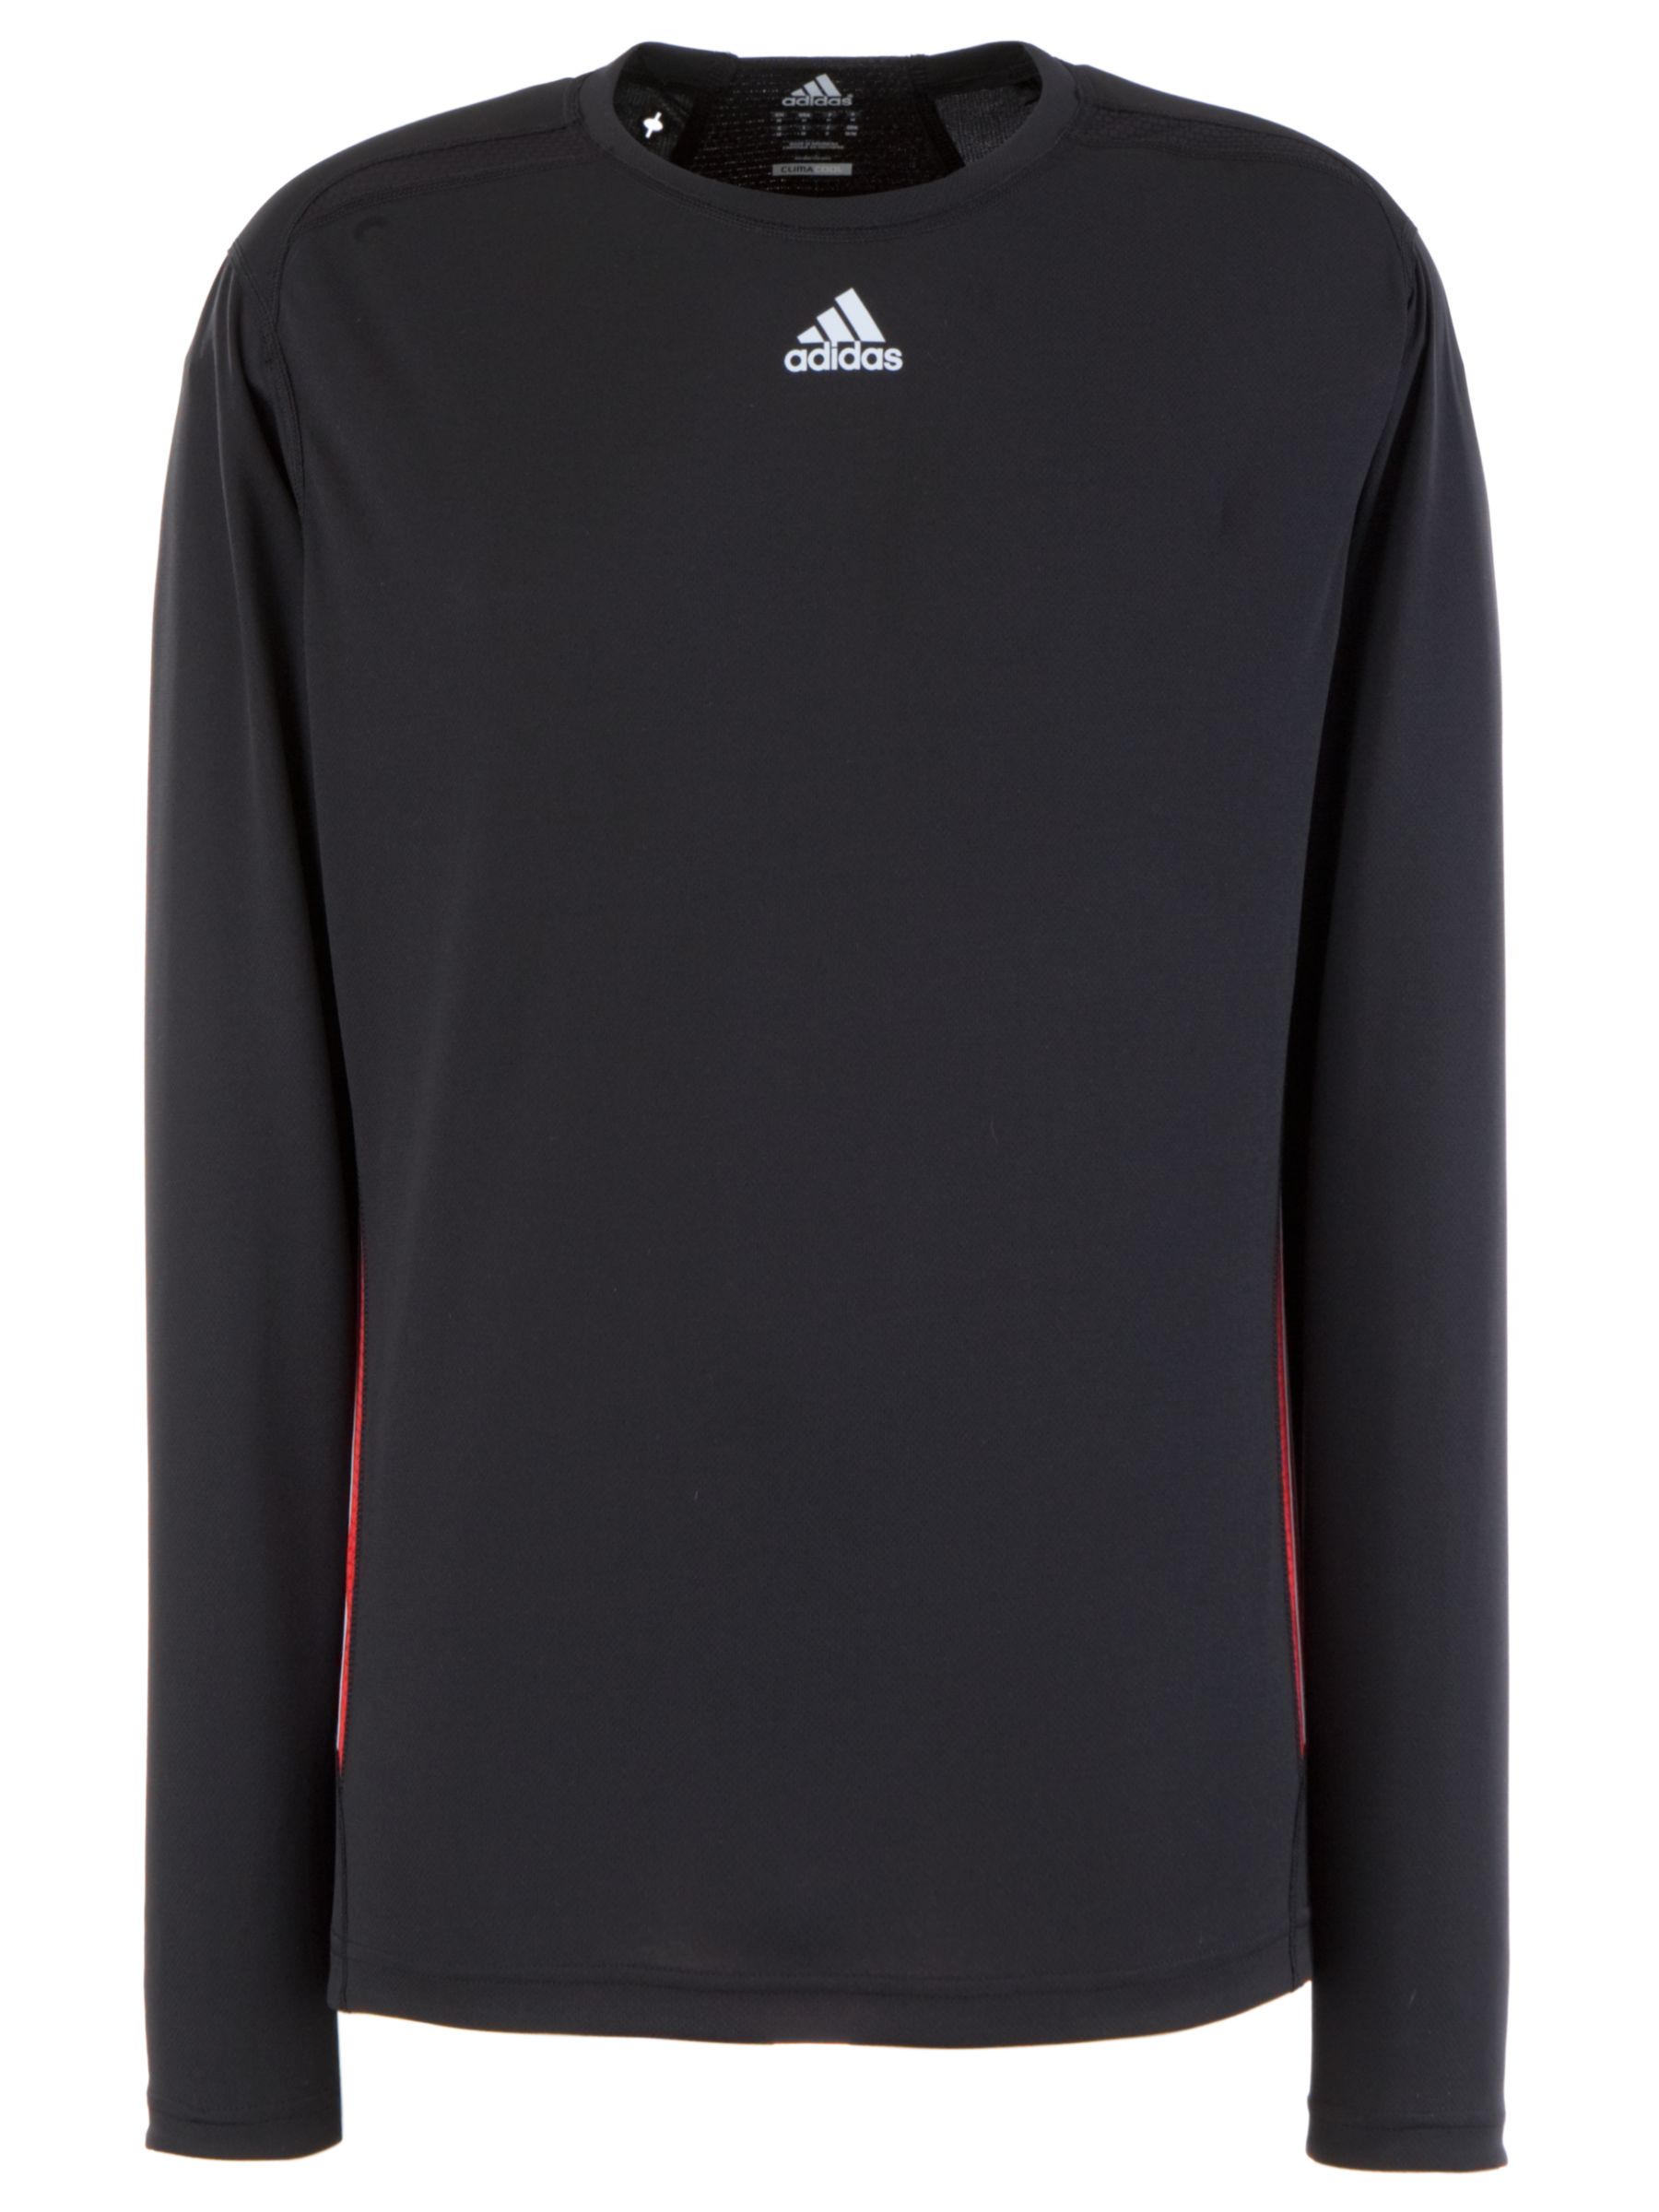 Adidas Supernova Long Sleeve T-Shirt, Black